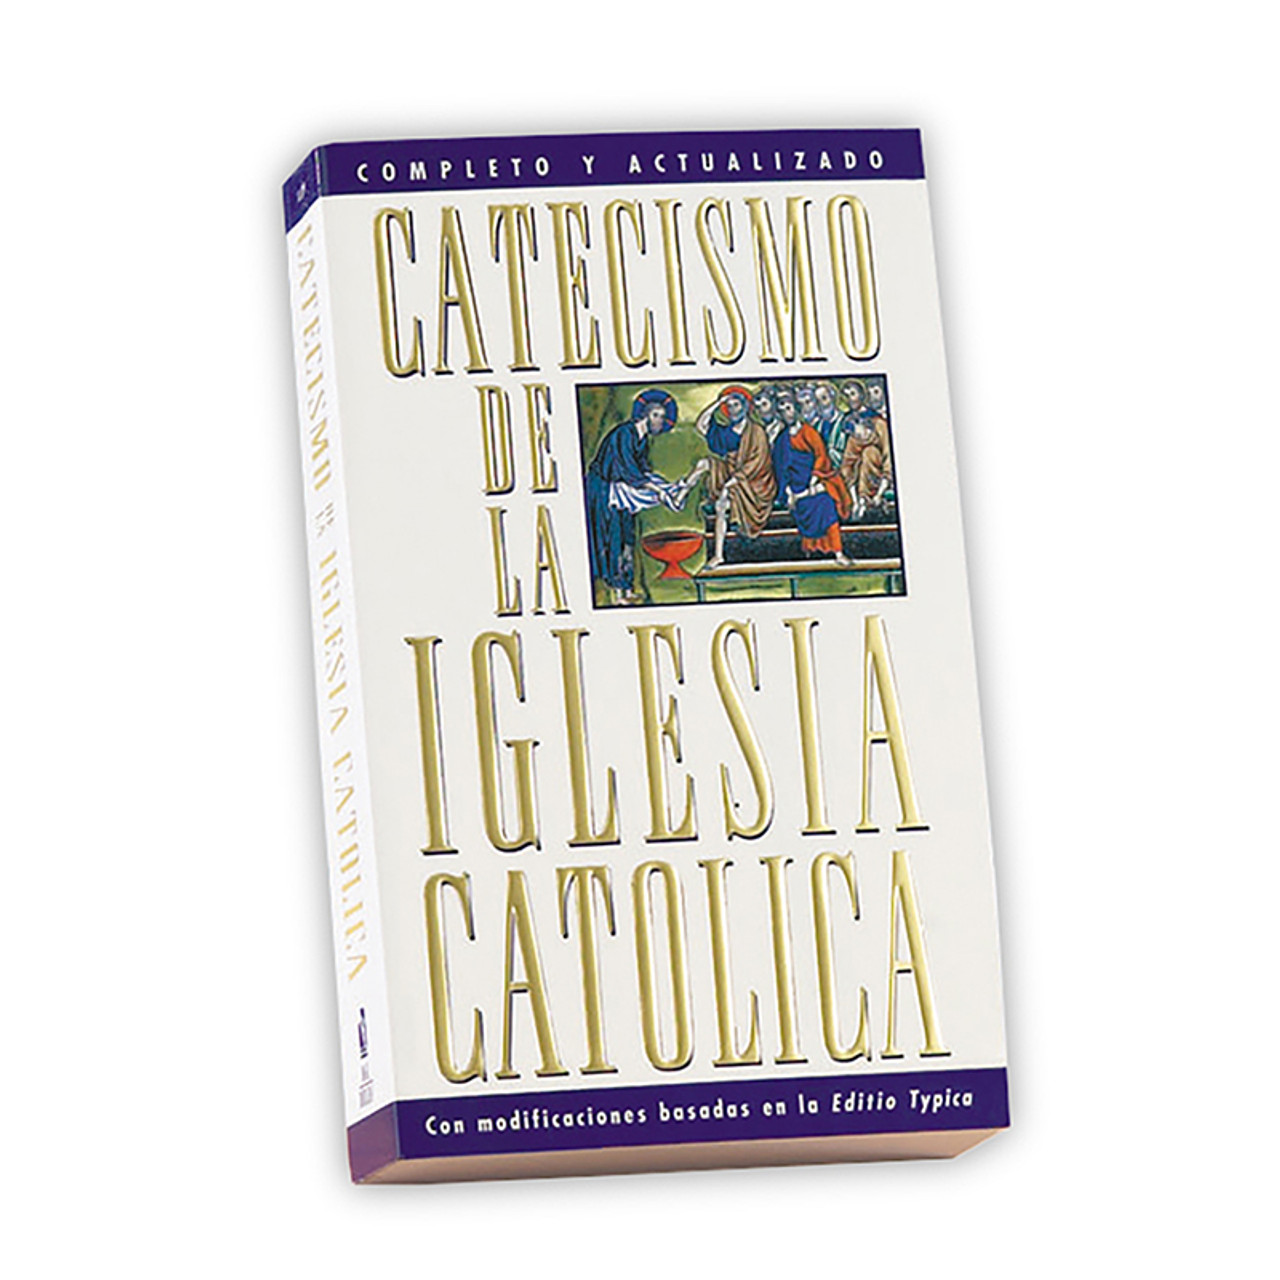 Catecismo de la Iglesia Catolica - Paperback Spanish Catechism - [Consumer] Catholic Gifts & More